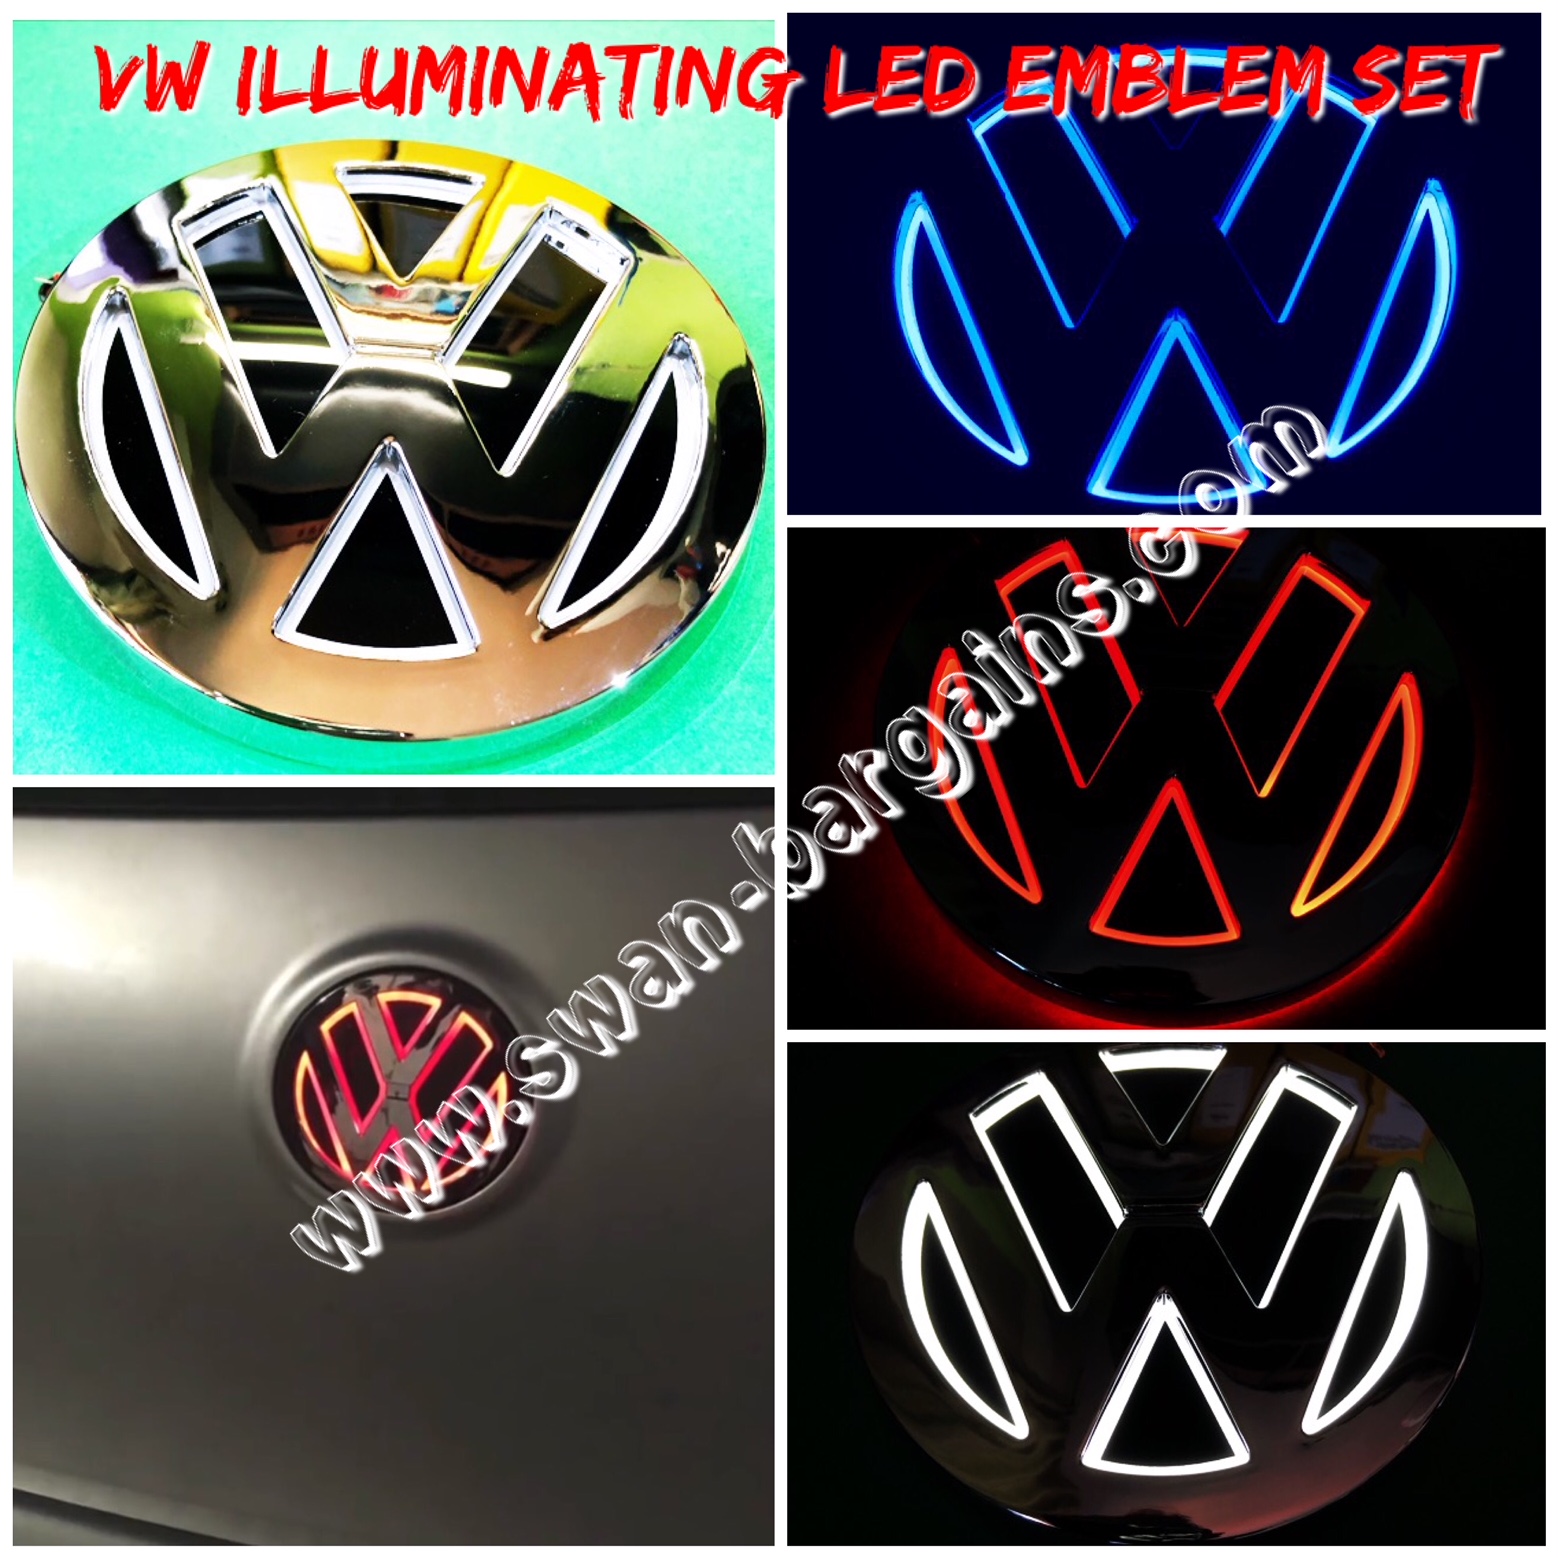 Volkswagen VW Illuminating LED Rear Batch Emblem Singapore